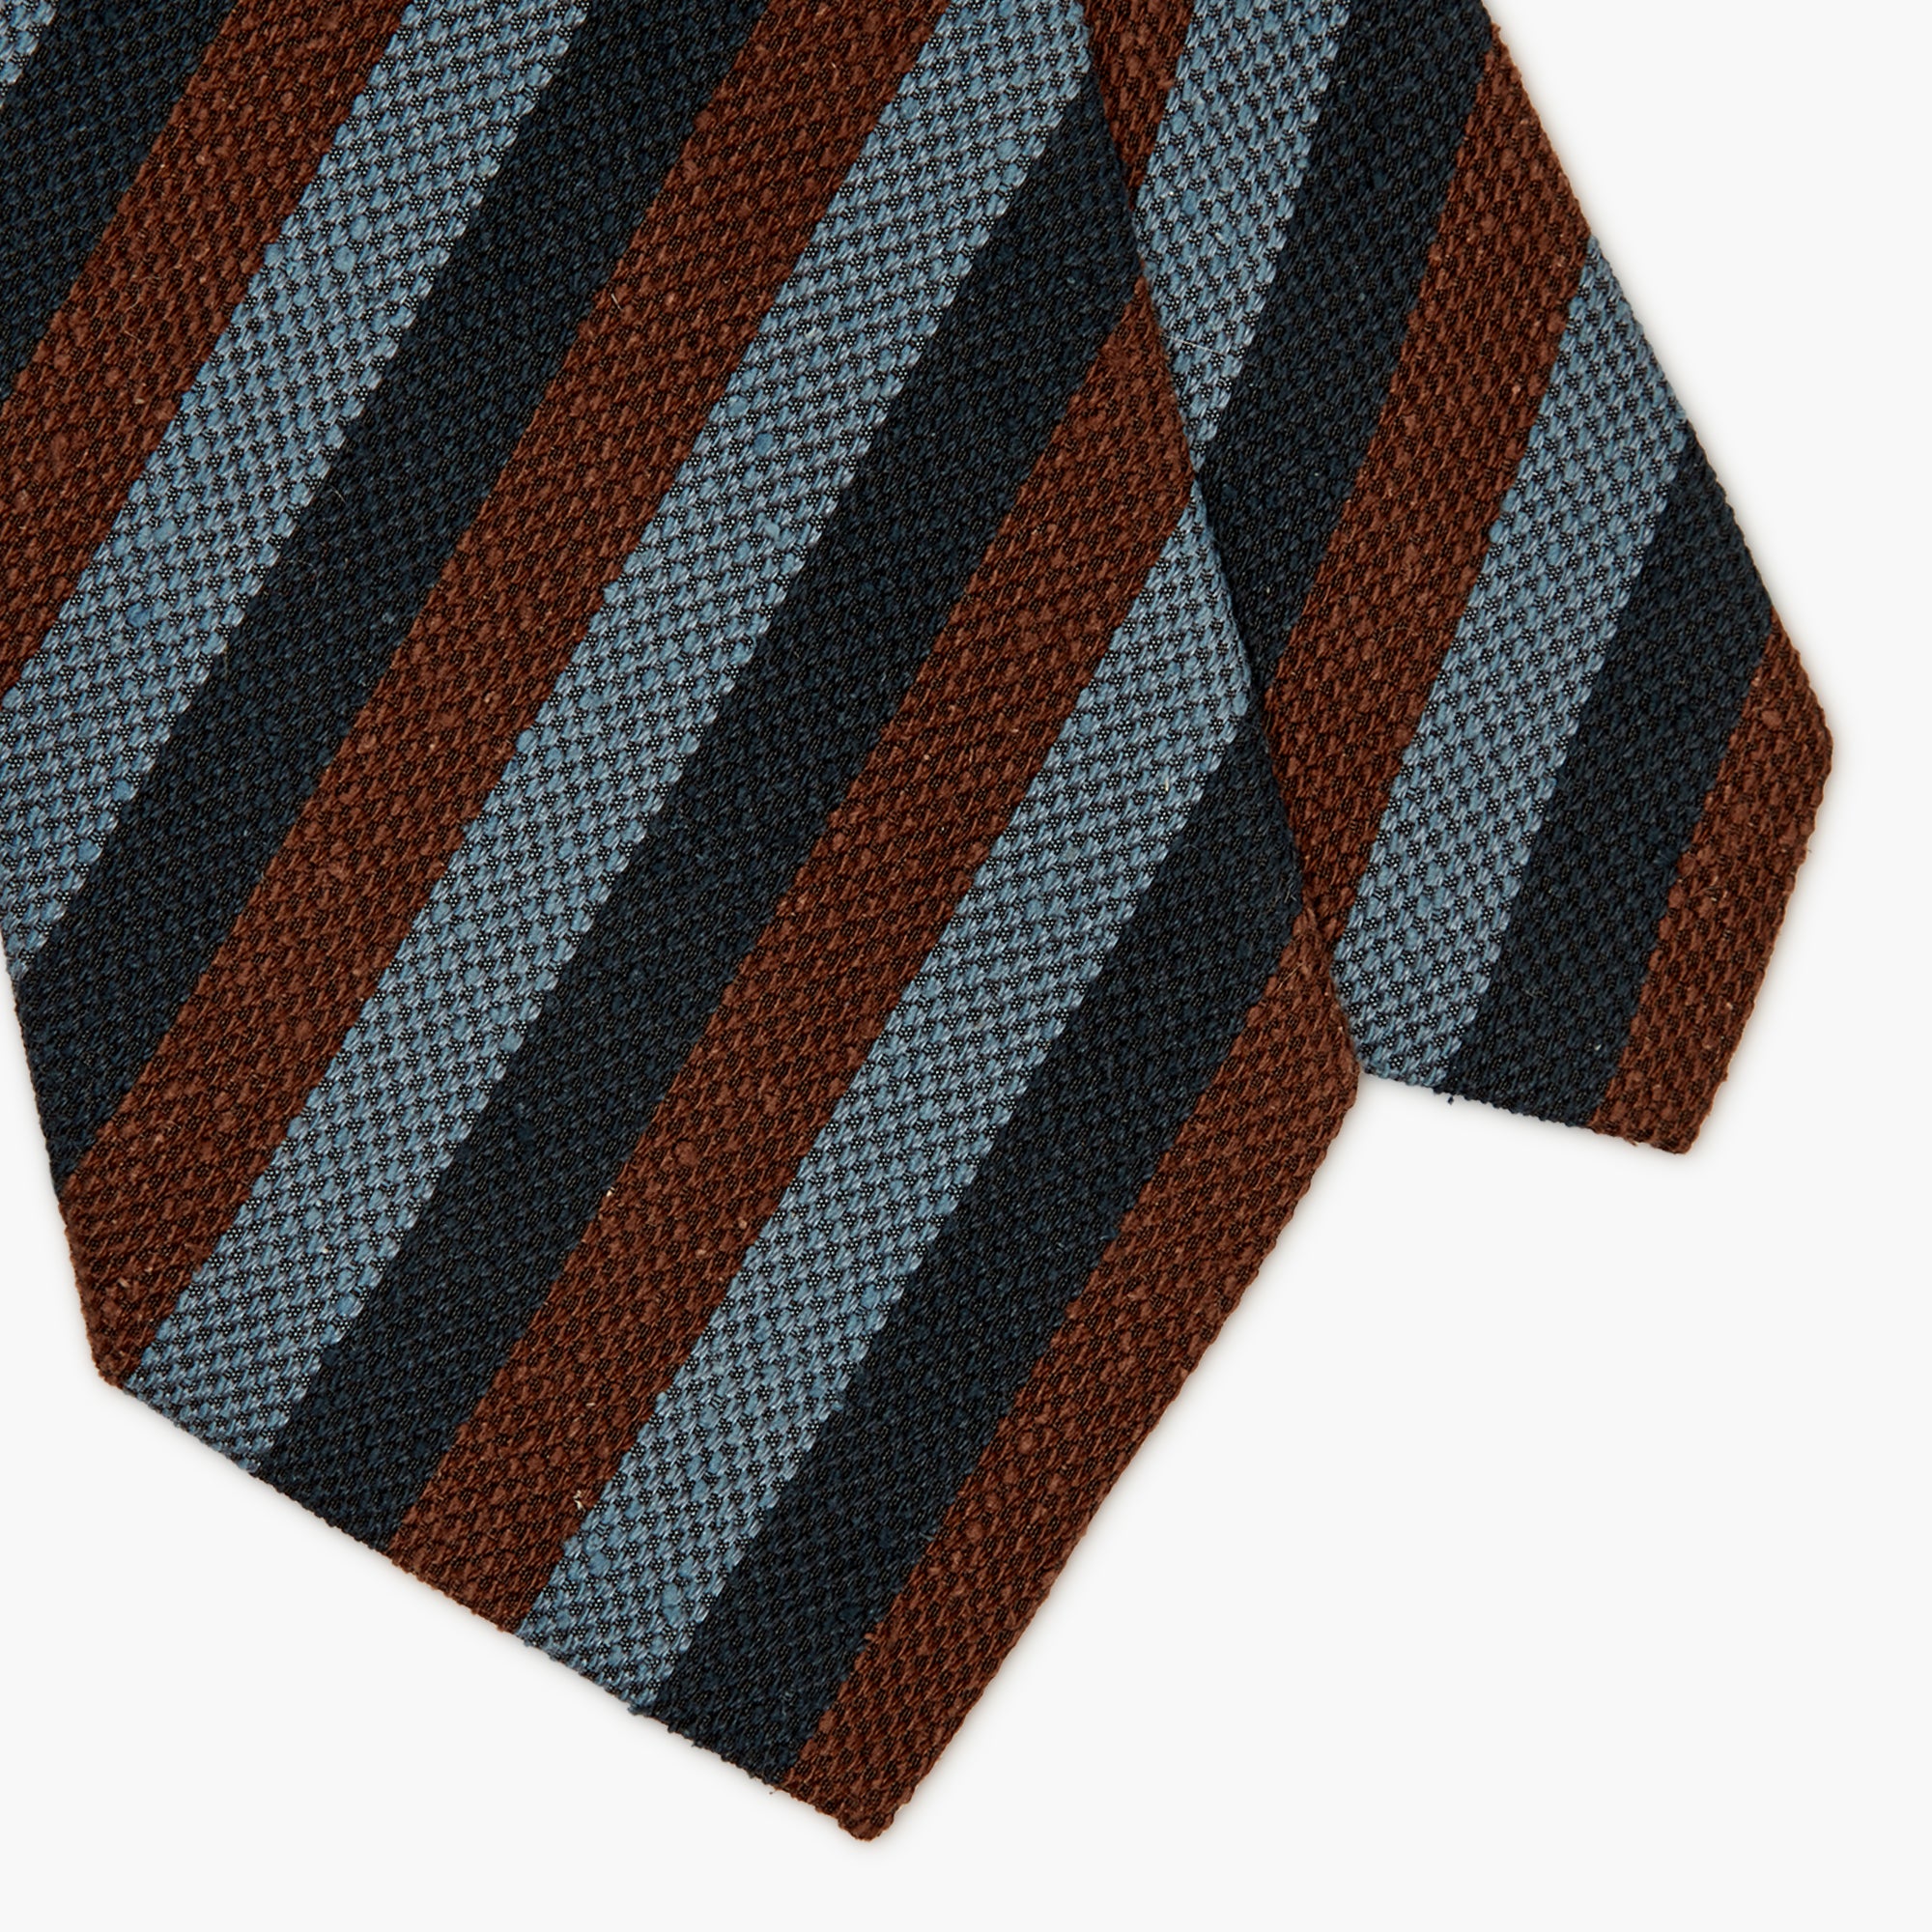 3-Fold Multi Stripe Jacquard Silk Tie - Blue Light Blue Brown